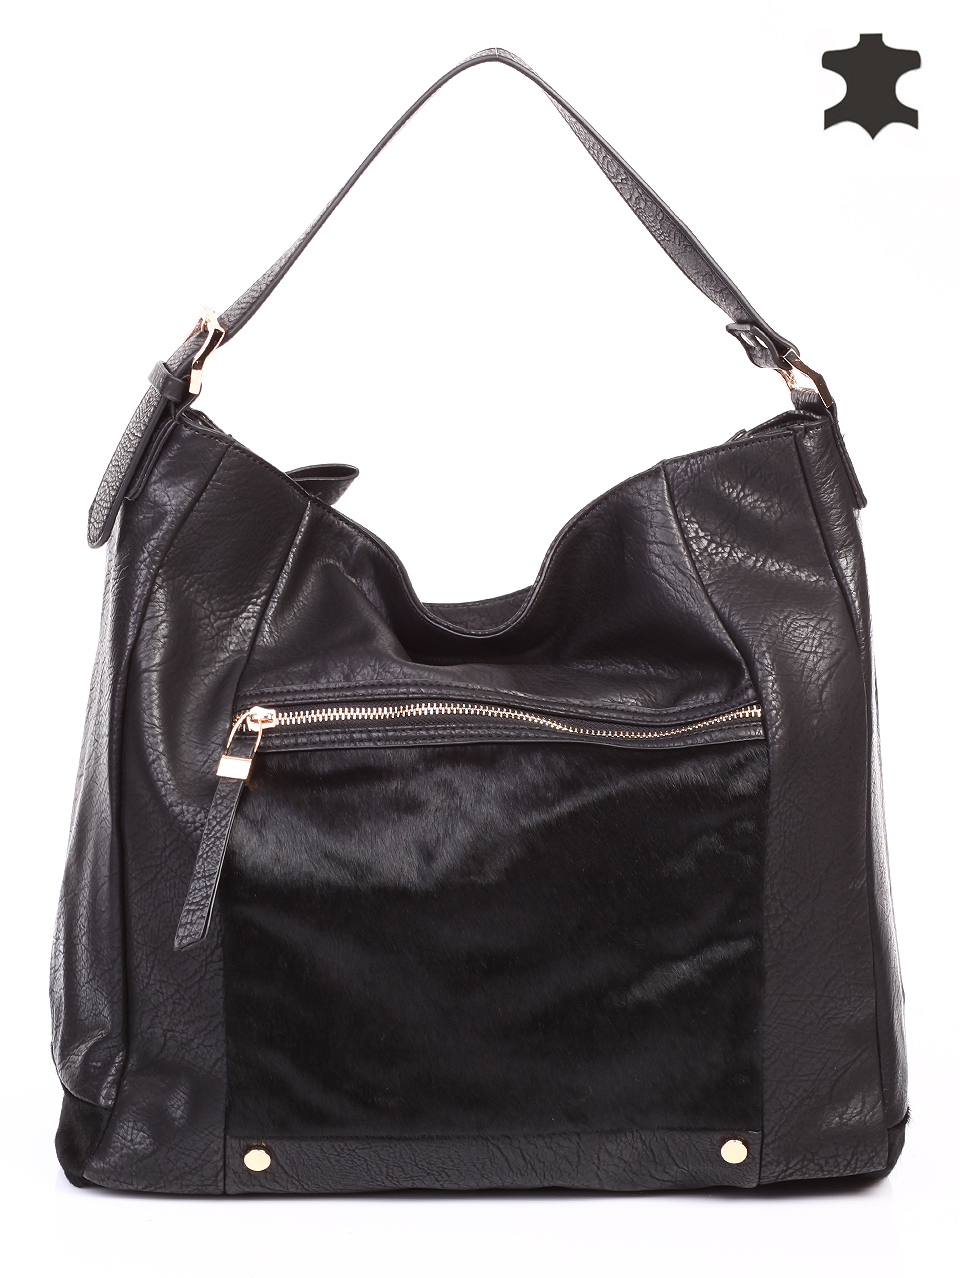 Black Leather Tote. Black Fur Tote. Black Leather Handbag. Black Hobo. Black Purse. Fashion Handbag.